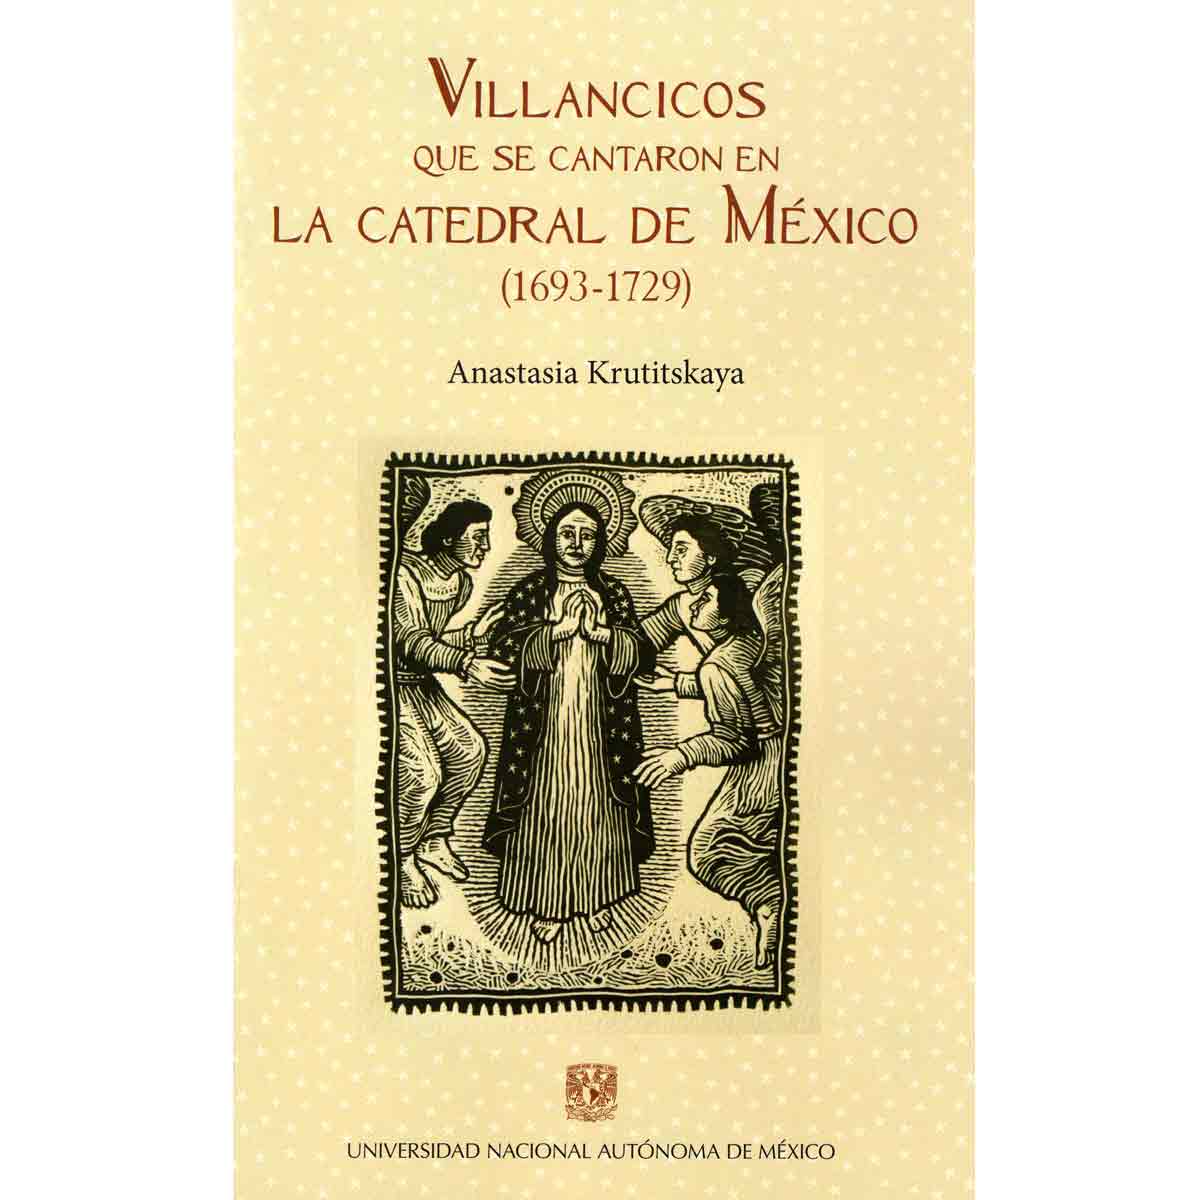 VILLANCICOS QUE SE CANTARON EN LA CATEDRAL DE MÉXICO (1693-1729)